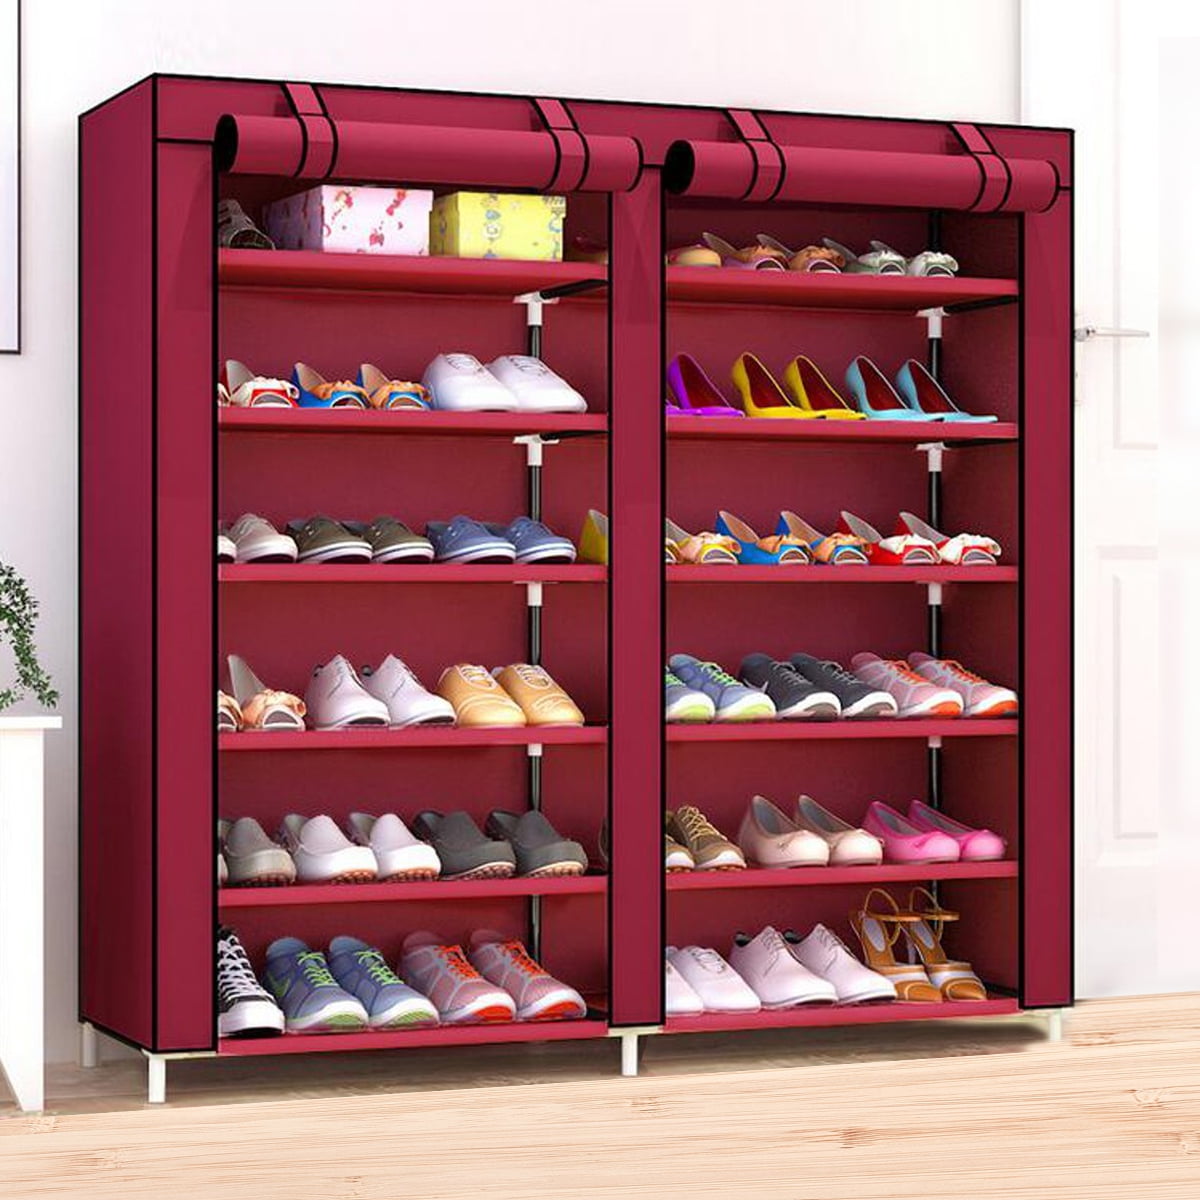 Details about   Shoe Rack Shelf Storage Closet Organizer Cabinet Portable 6 Layer Tier Coffee 